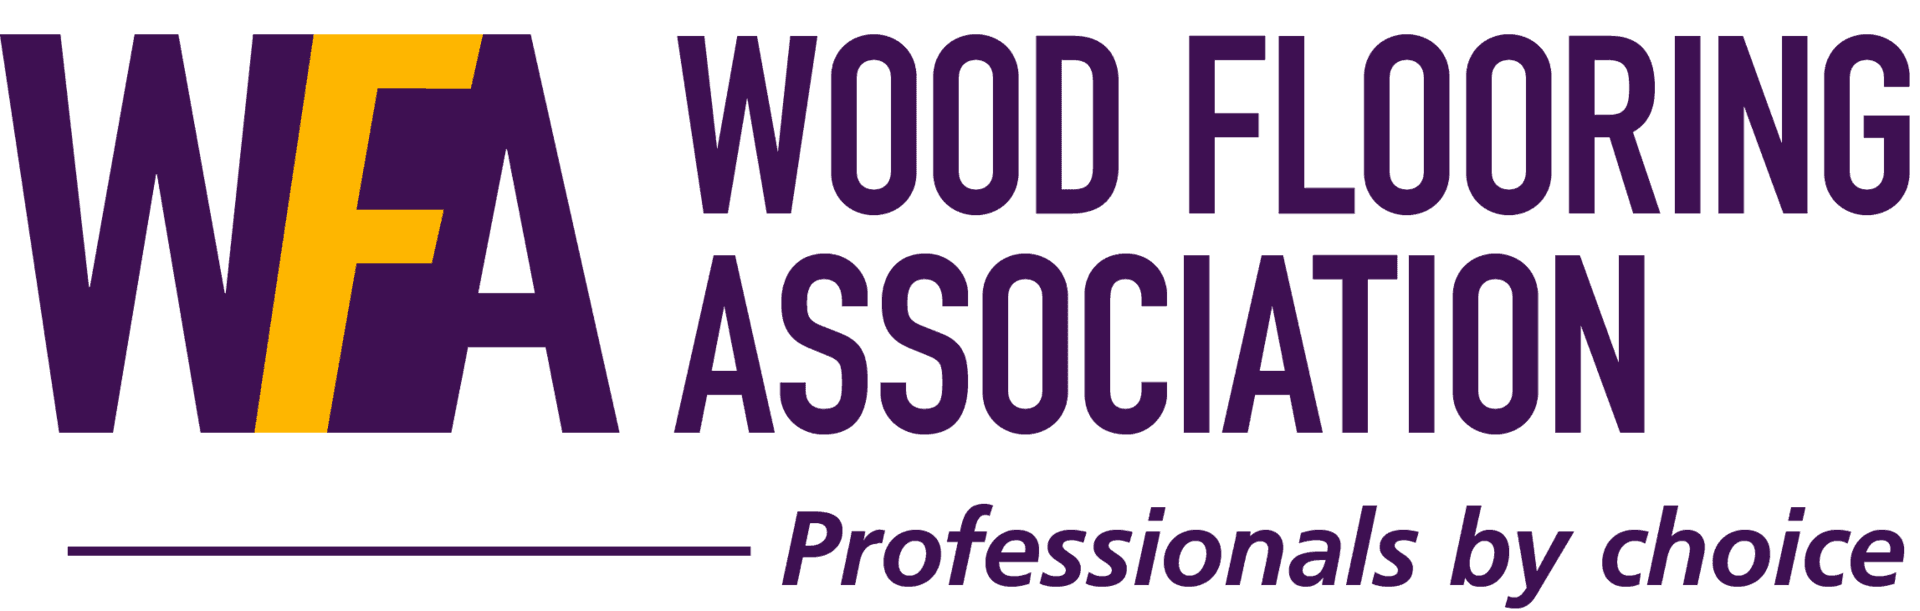 wood flooring association logo